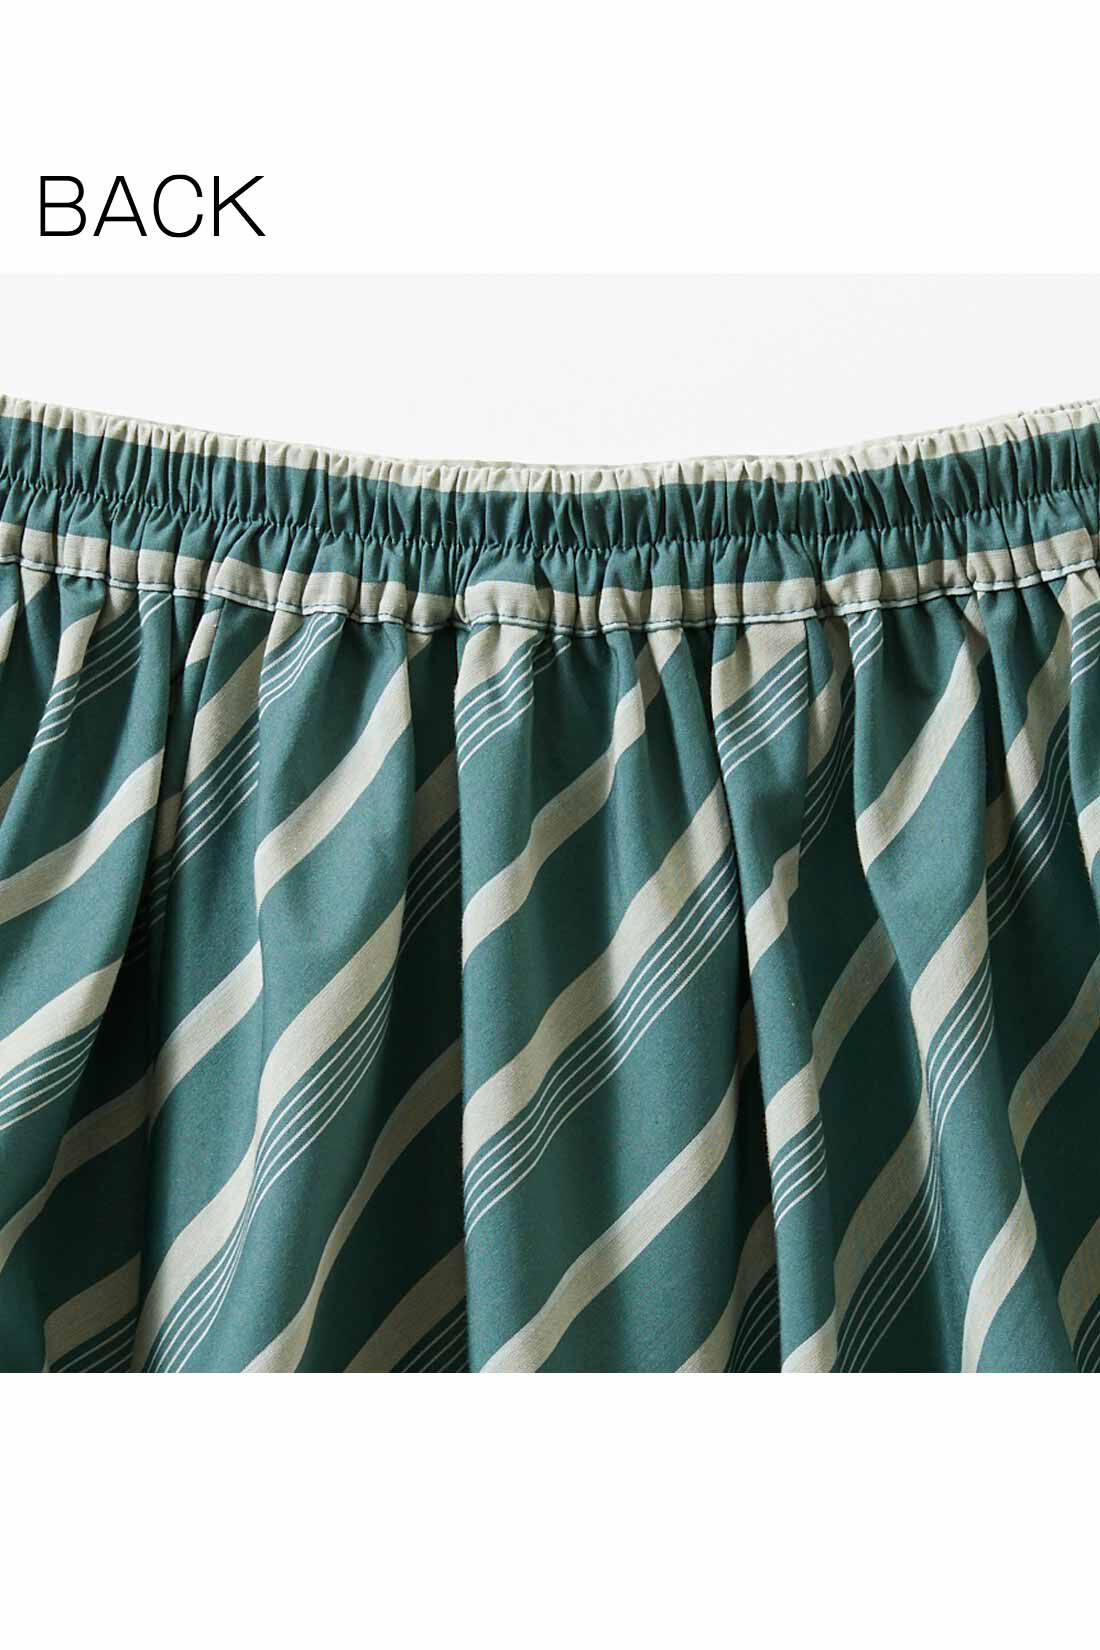 Real Stock|IEDIT[イディット]　ストライプ柄切り替えスカート〈グリーン〉|ウエストはわきから後ろゴム仕様でらくな着心地。